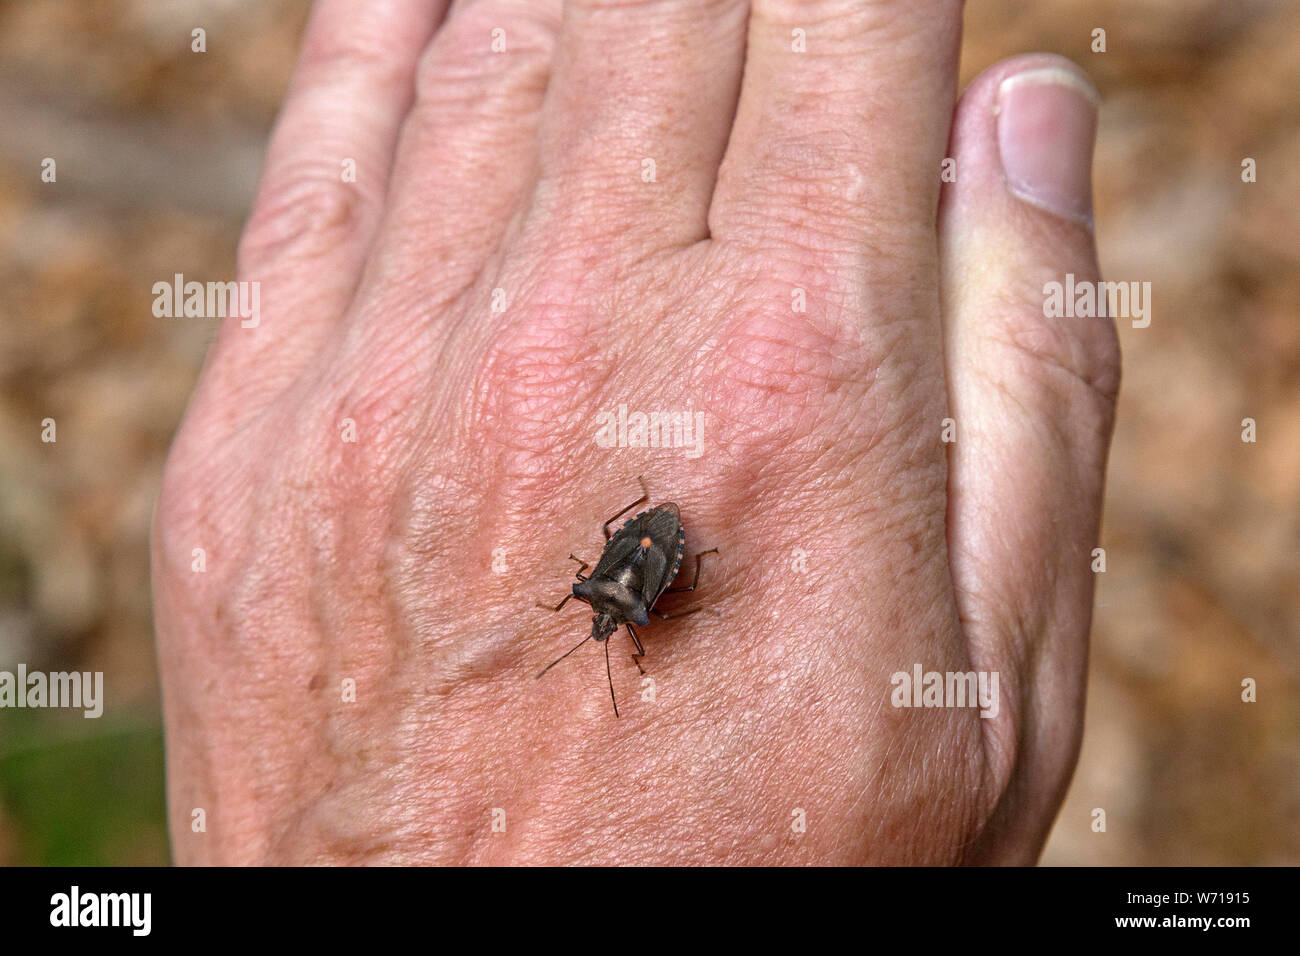 bug (Hemiptera) on hand, Bodenmais, Bayerischer Wald, Bavaria, Germany Stock Photo